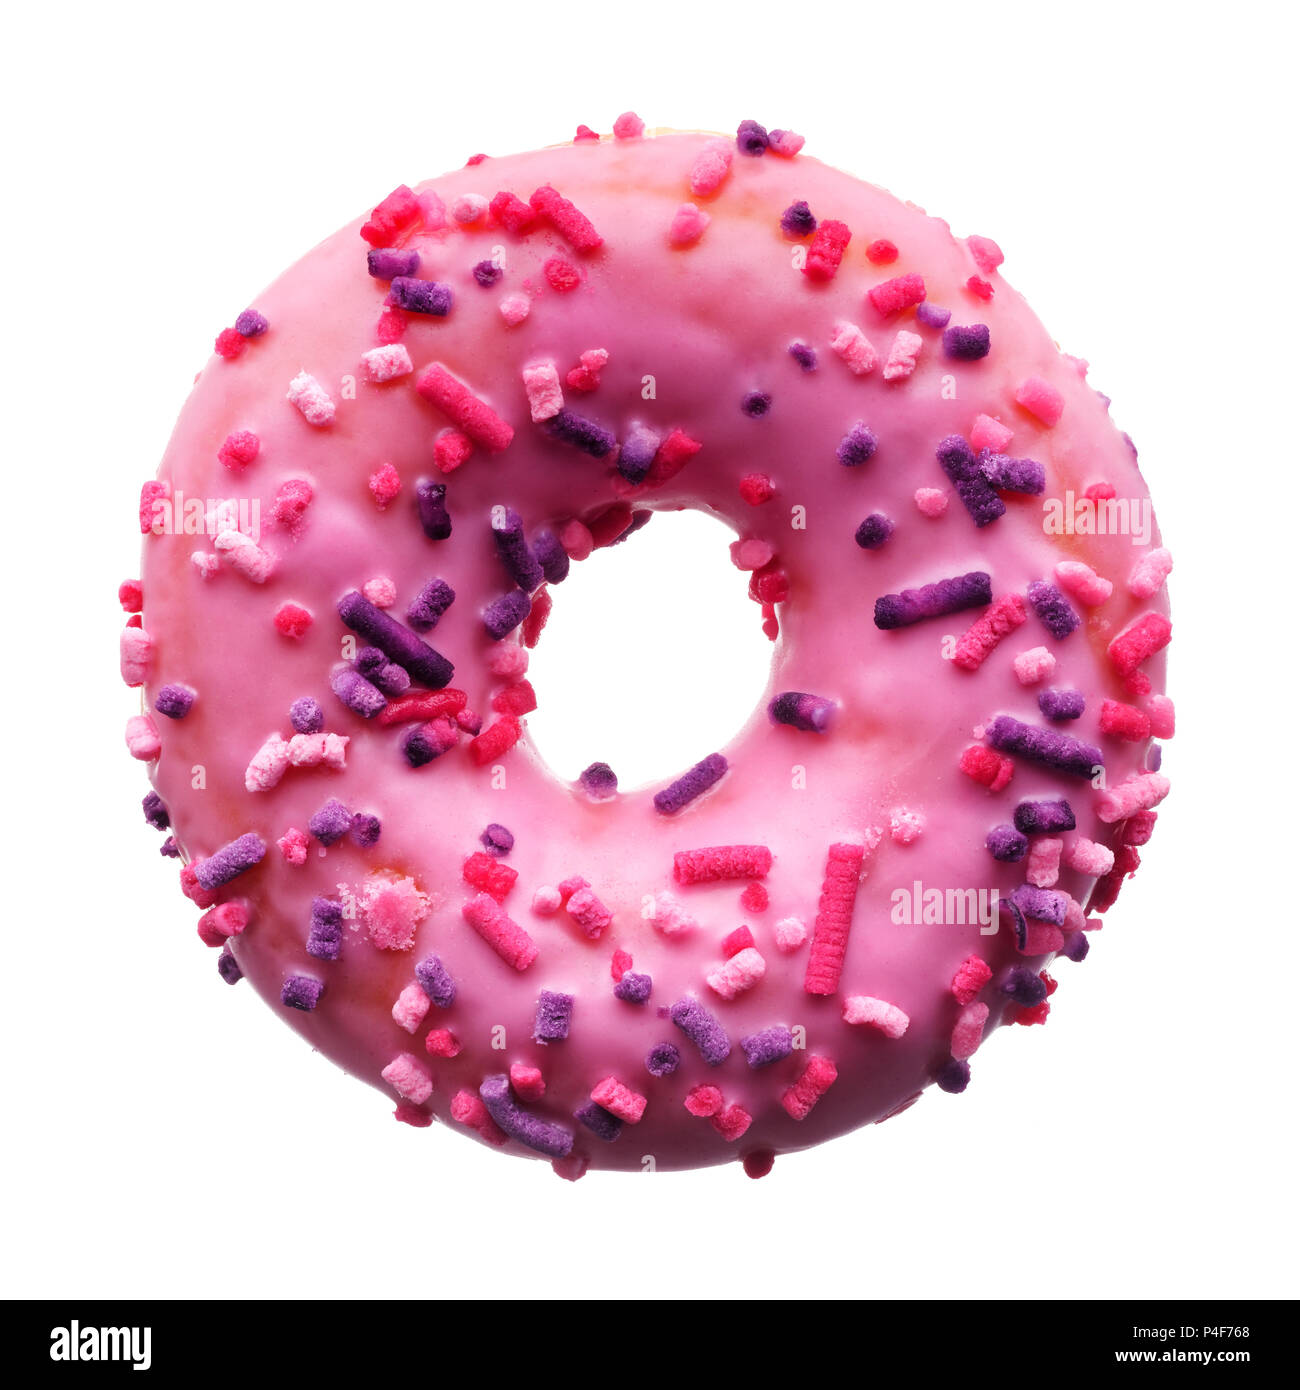 Food: single pink donut, isolated on white background Stock Photo